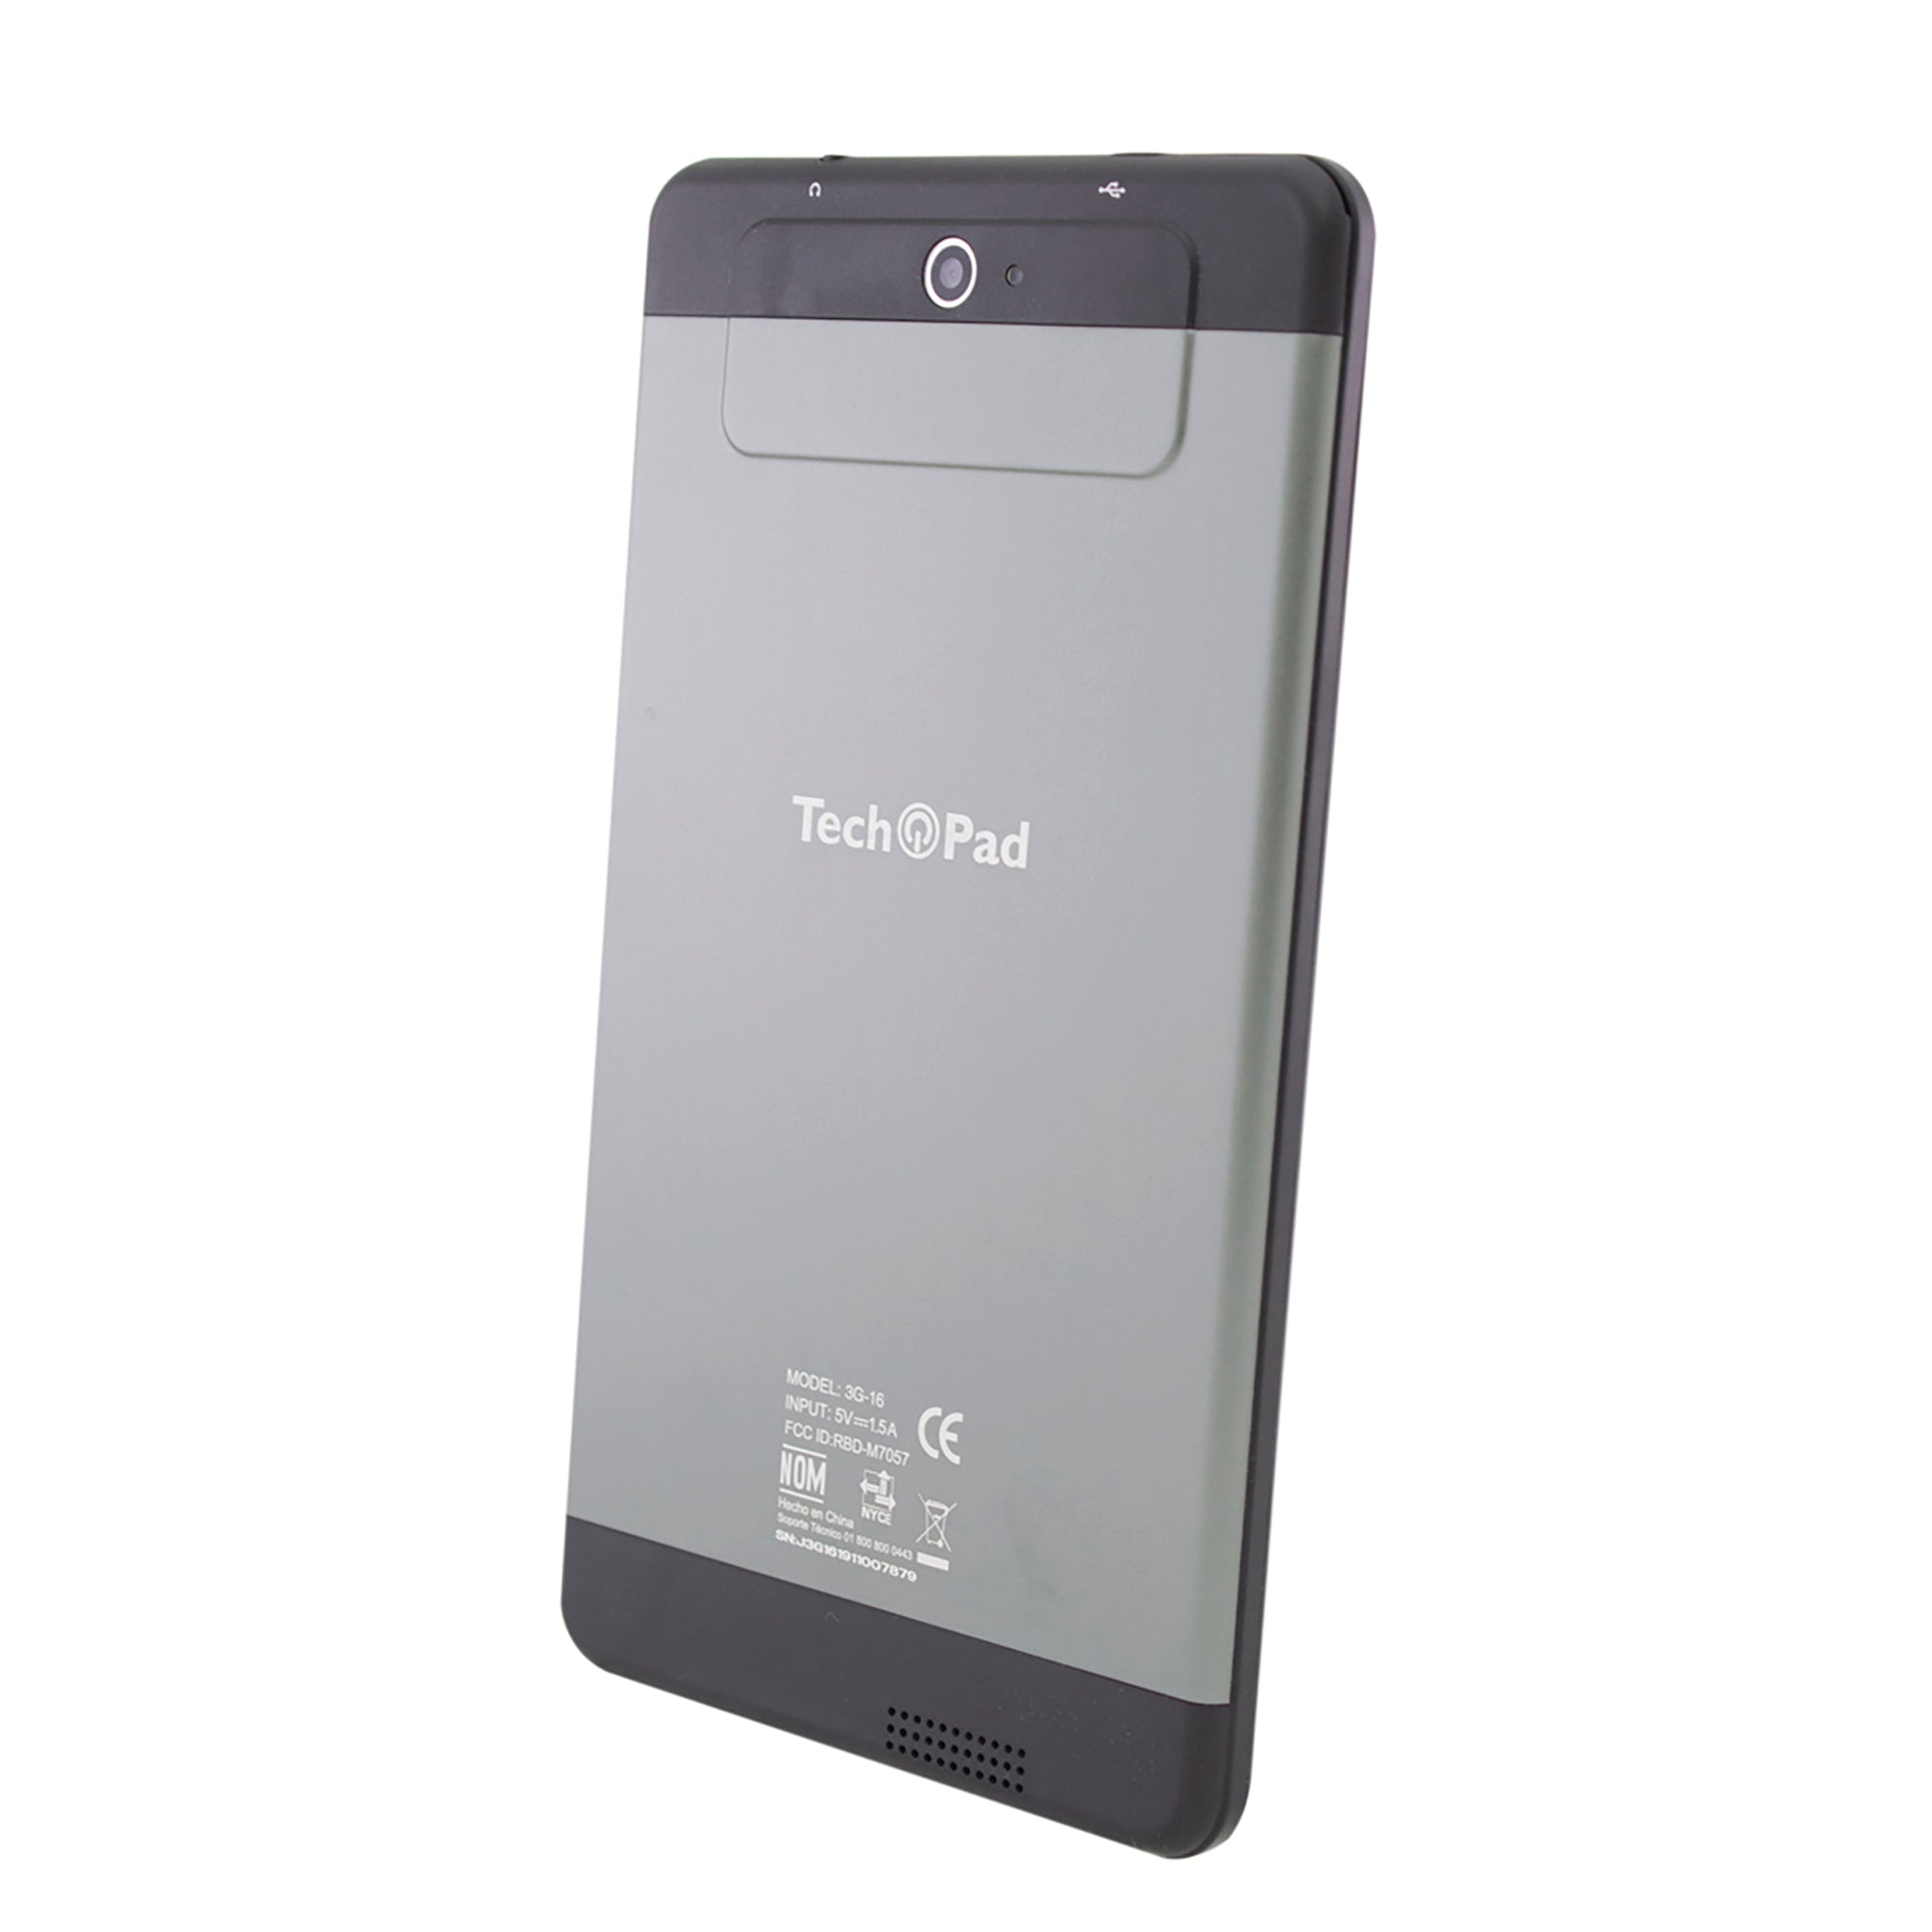 Tablet Tech Pad 3g-r 7  1gb Ram 16gb Doble Sim Card Wi-fi+3g